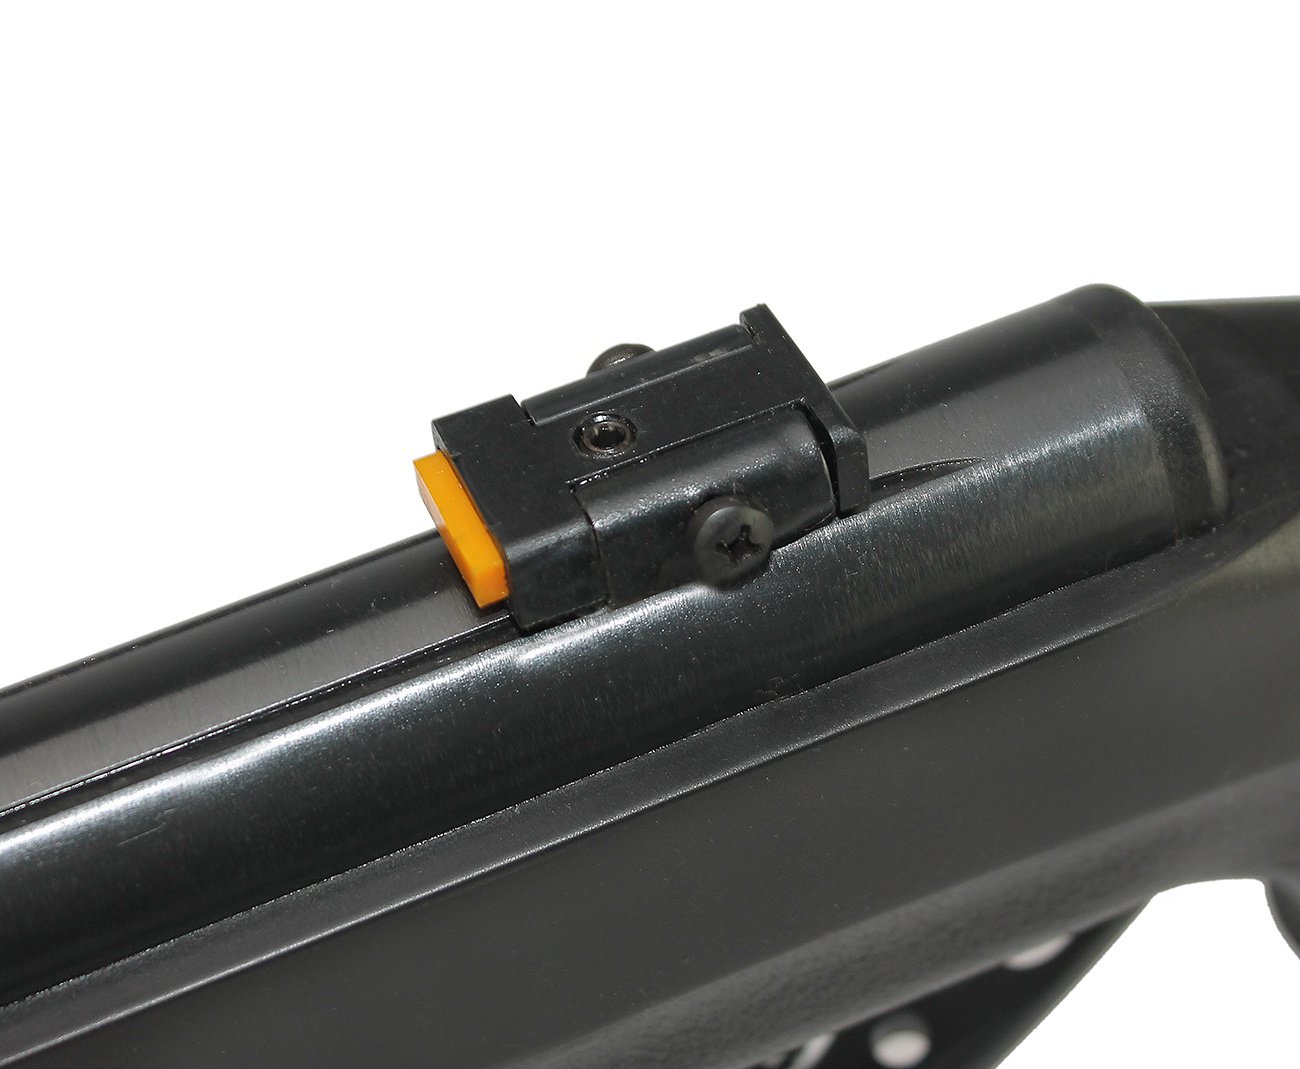 Carabina De Pressão Sag R1000 Cal 5,5mm Gas Ram Instalado - Rossi/sag